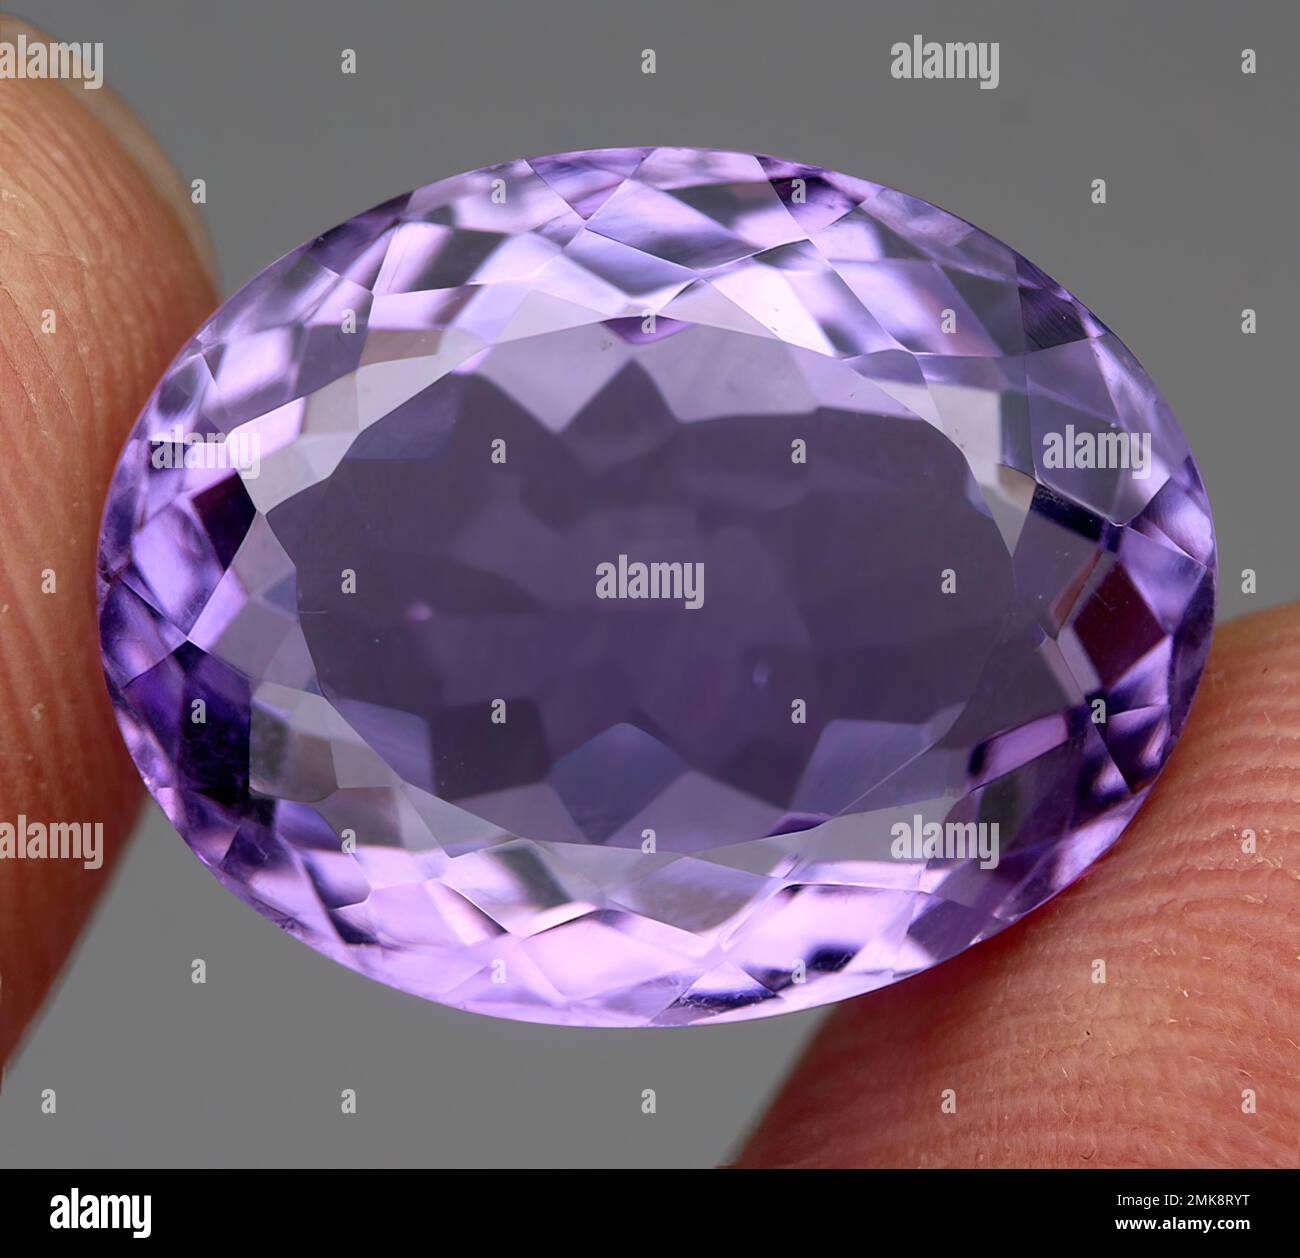 Natural gem purple amethyst on gray background Stock Photo